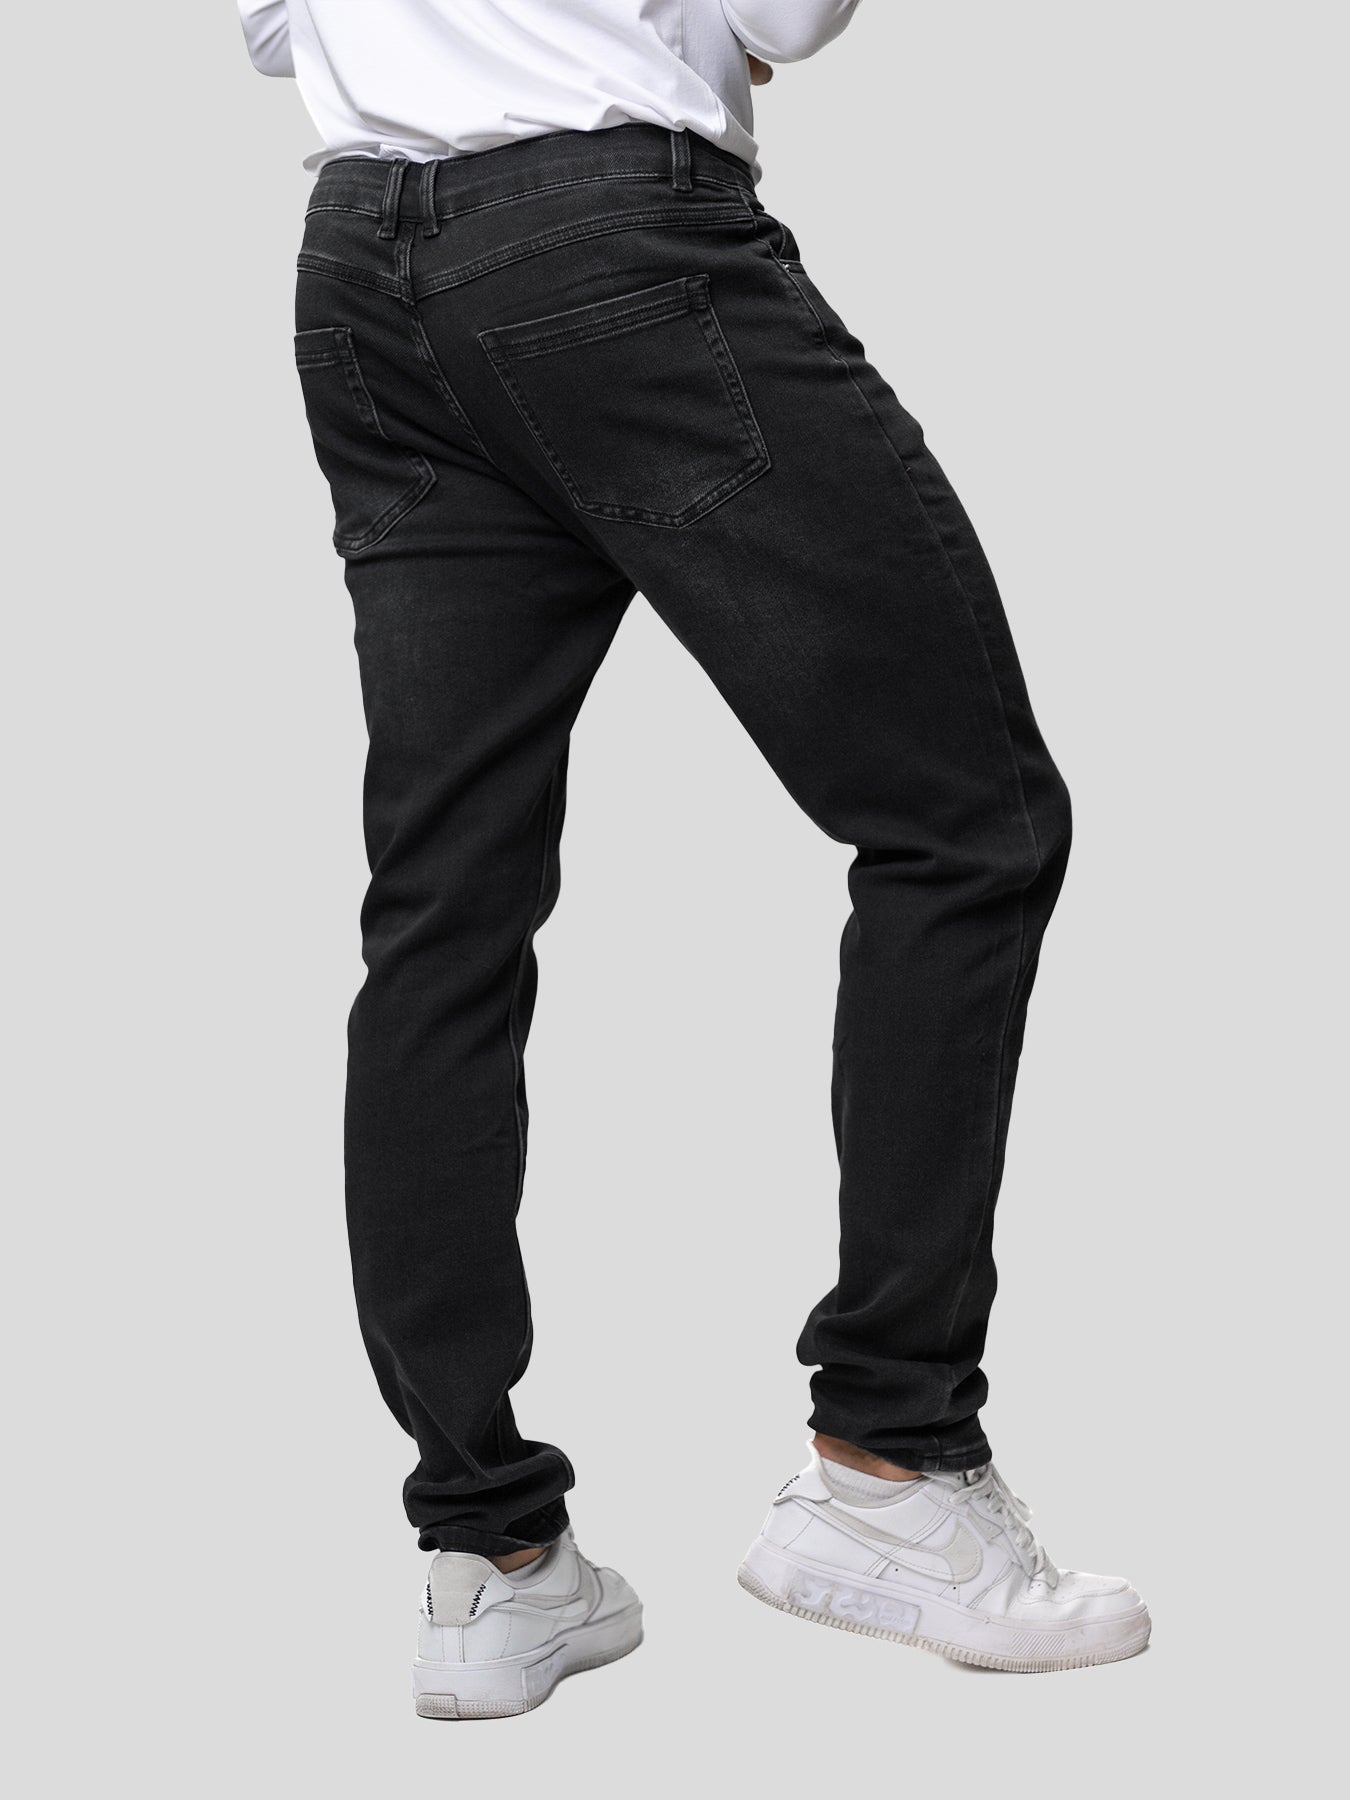 Fioboc Men\'s High Stretch Classic Pants Jeans